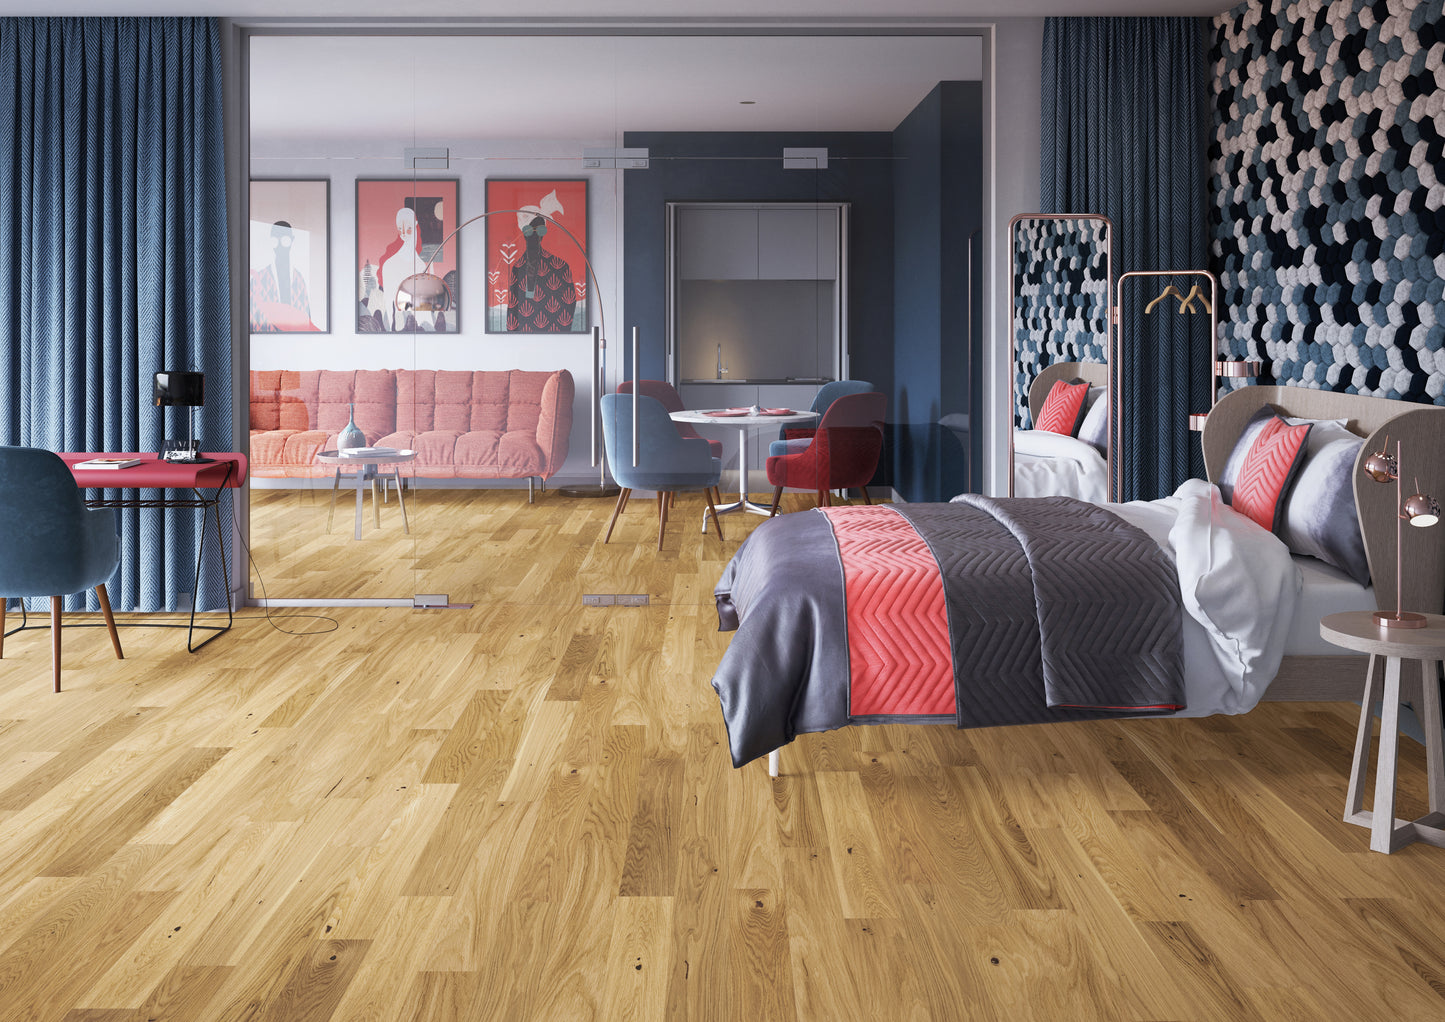 Barlinek Engineered Wooden Floor - Oak 1 strip Family 14mm - 0.84m²